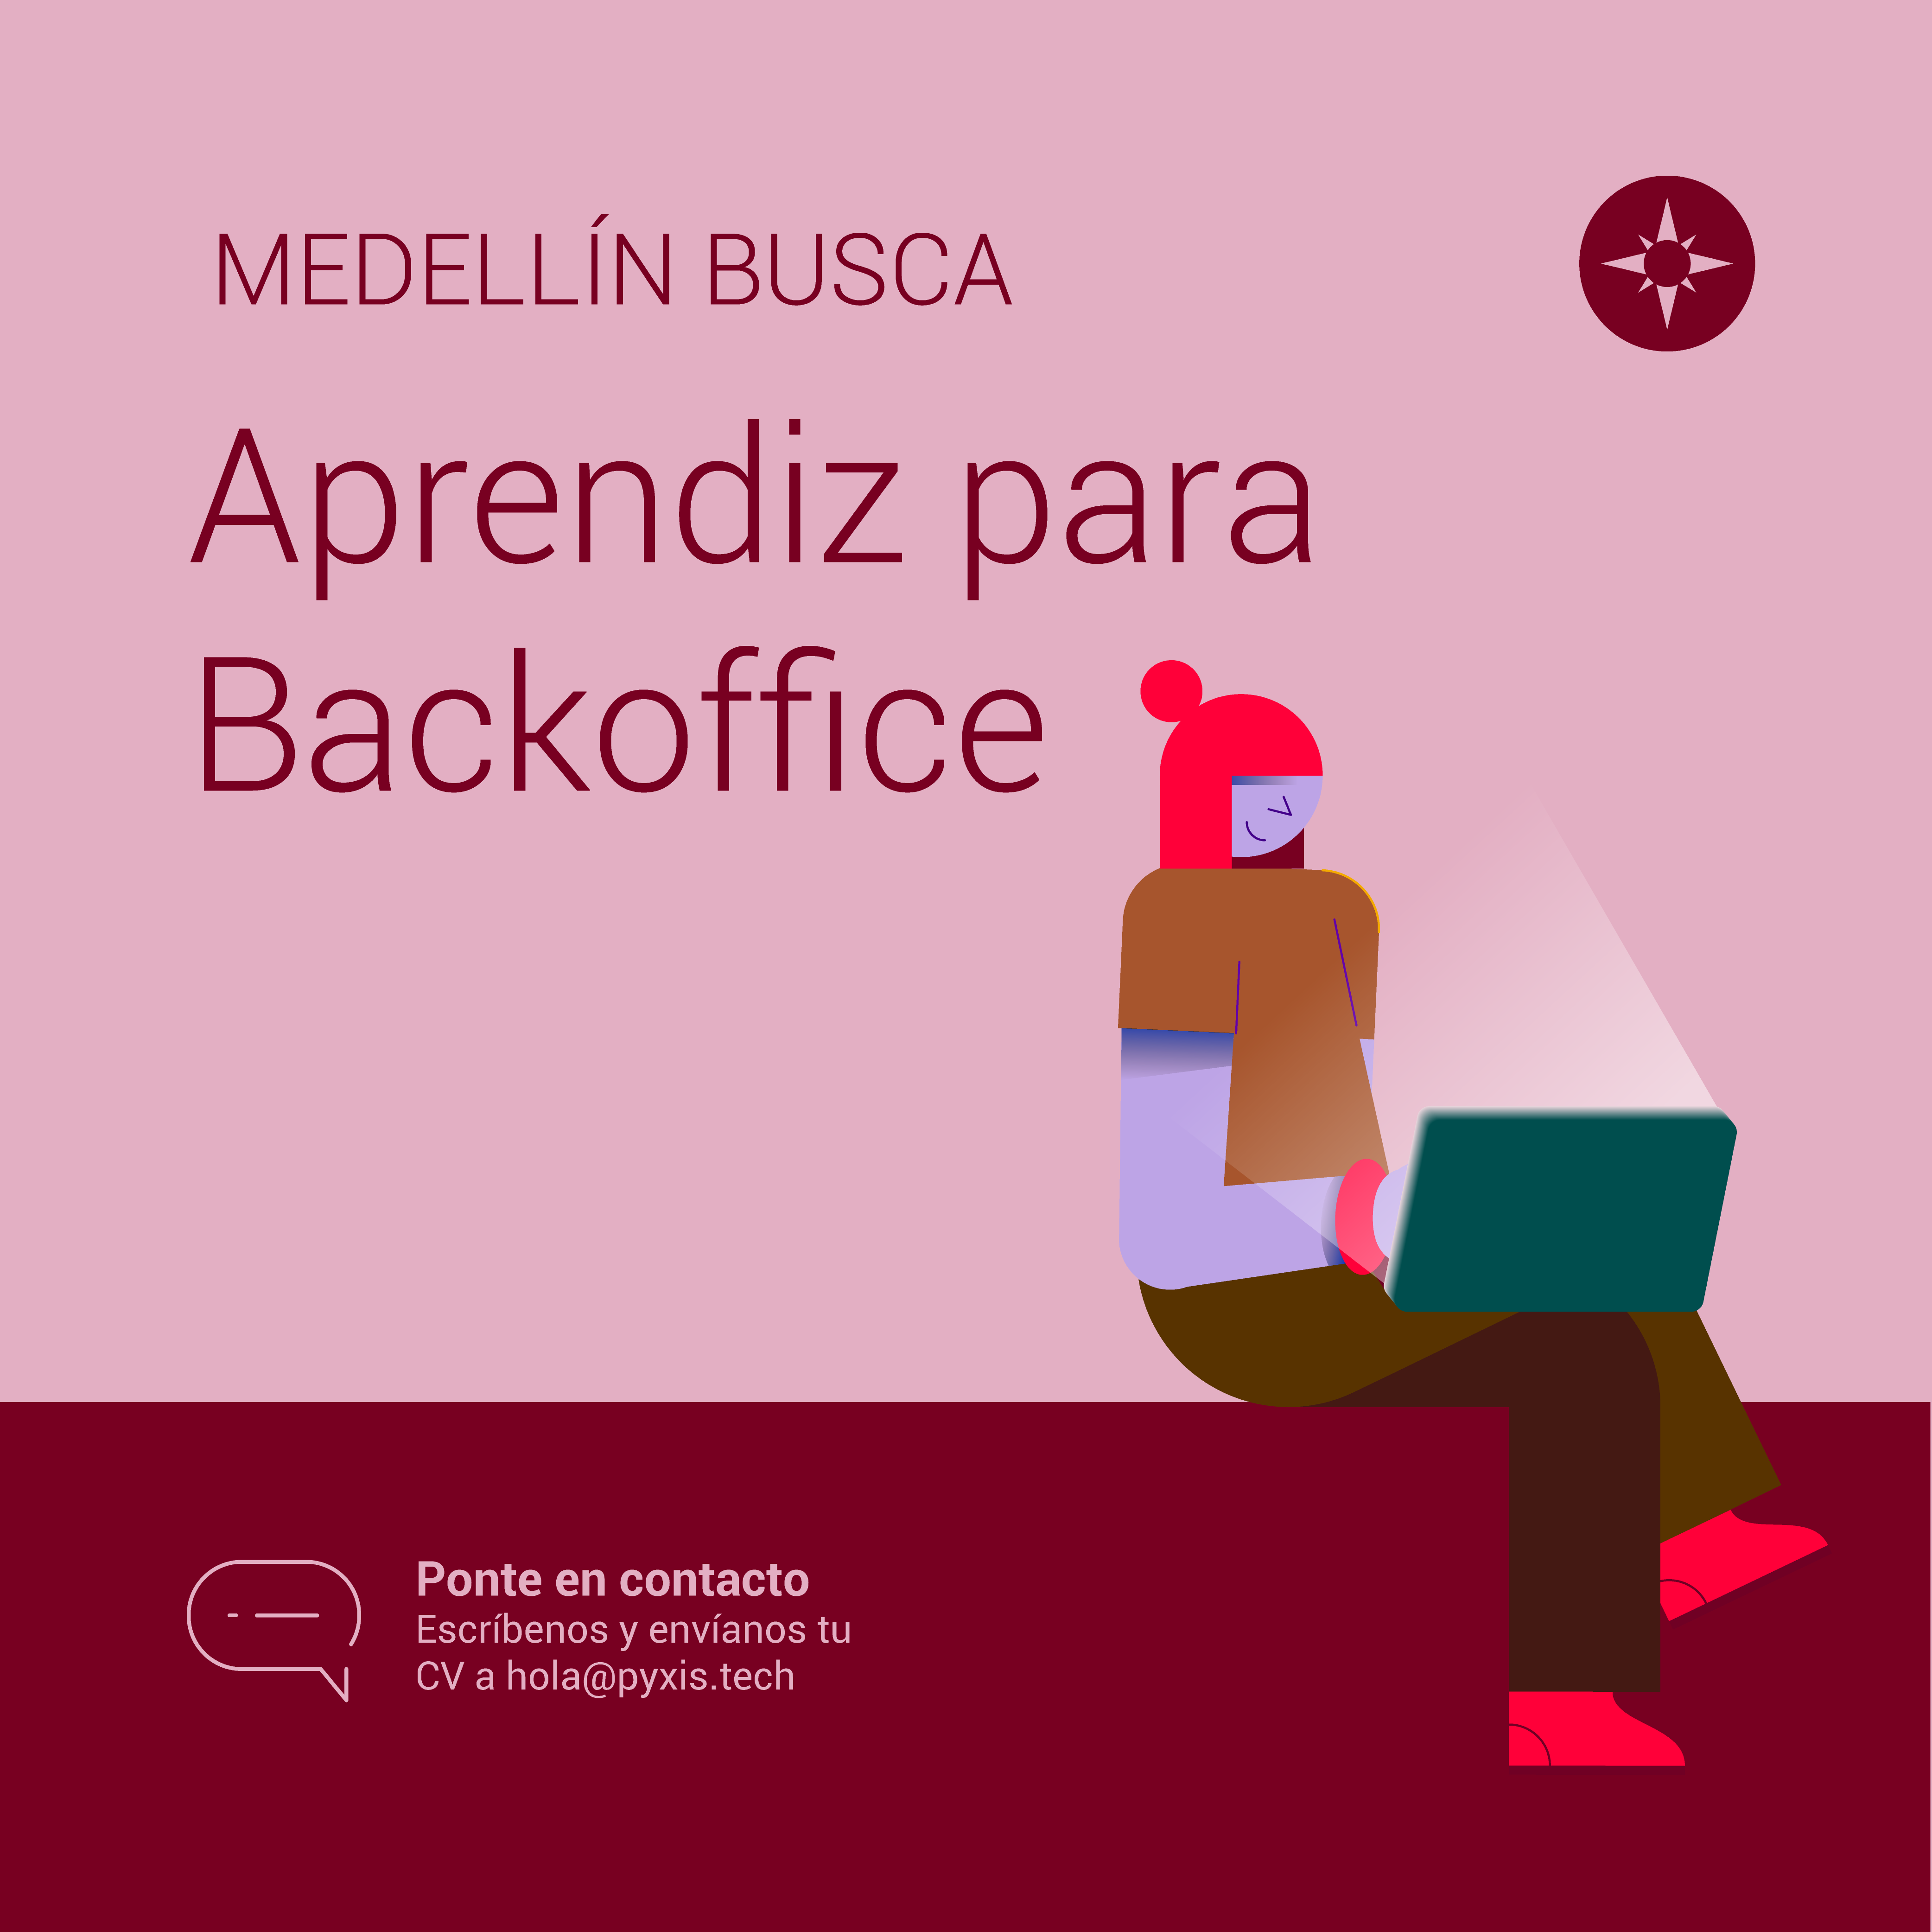 Buscamos Aprendiz para Backoffice en Medellín